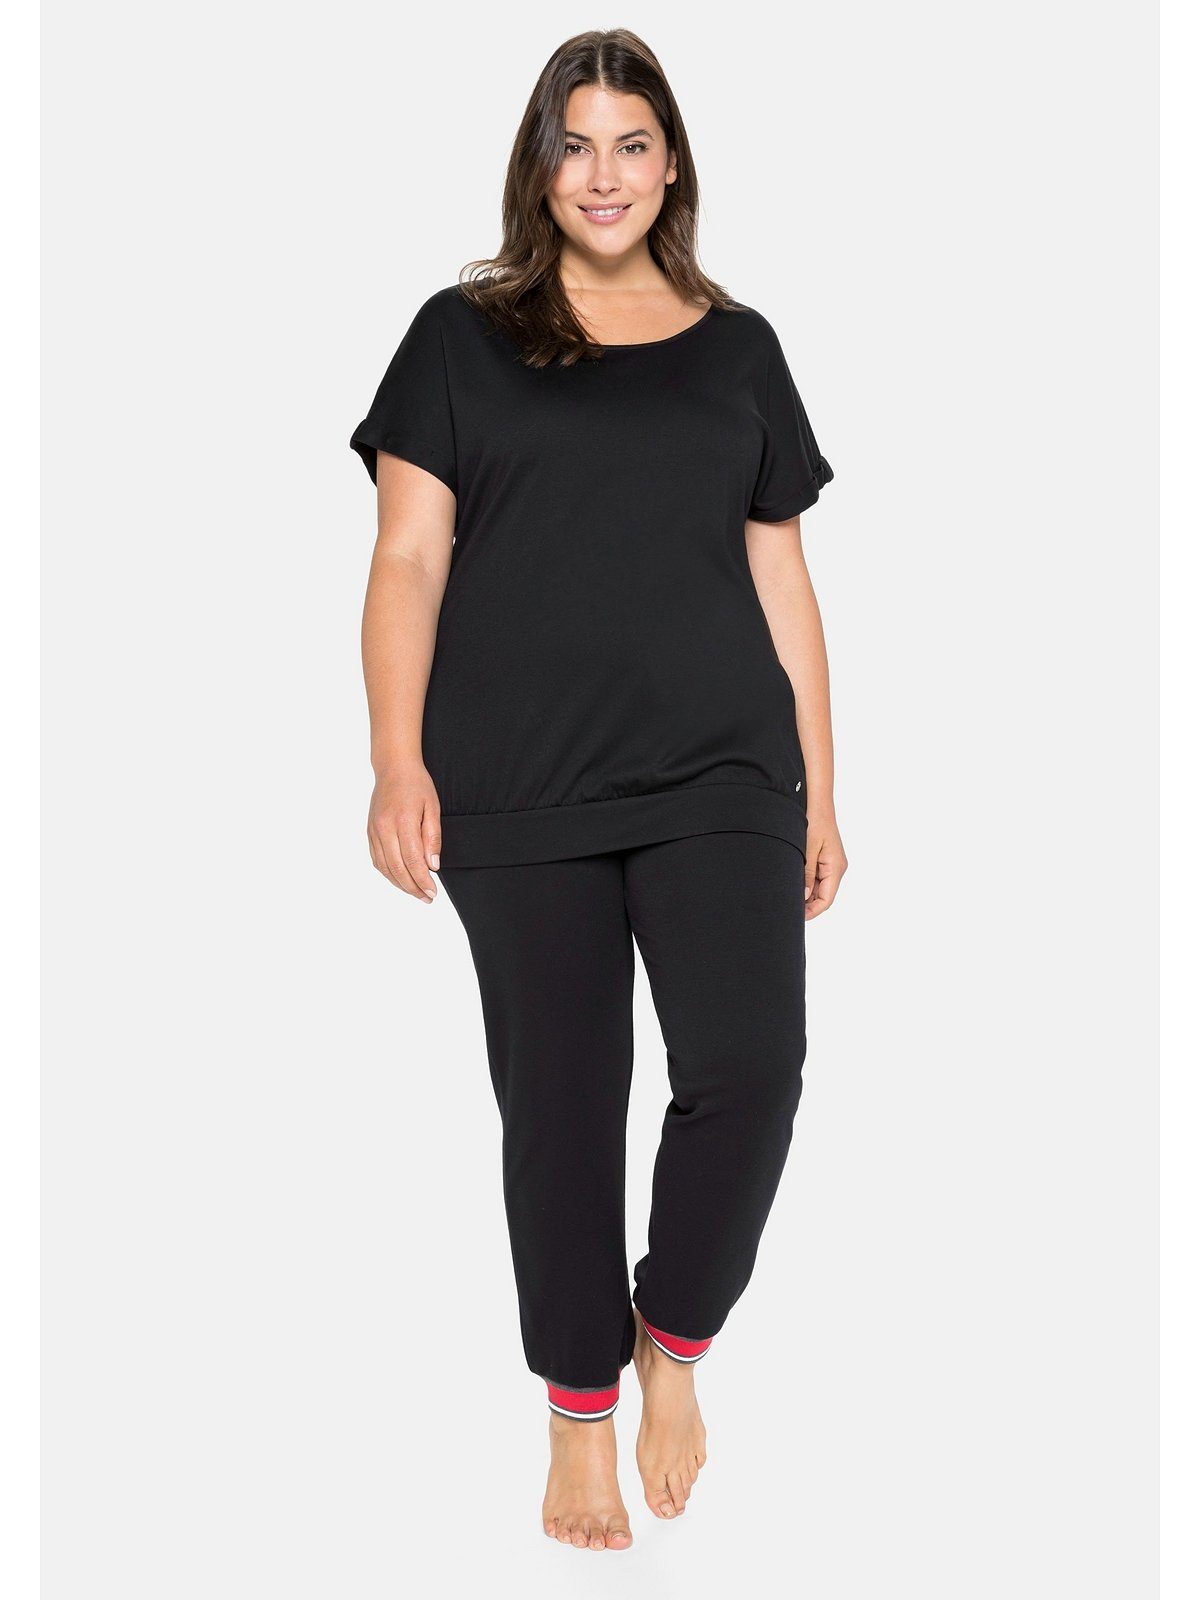 Damen Shirts Sheego T-Shirt Relaxshirt mit Streifen-Applikation hinten